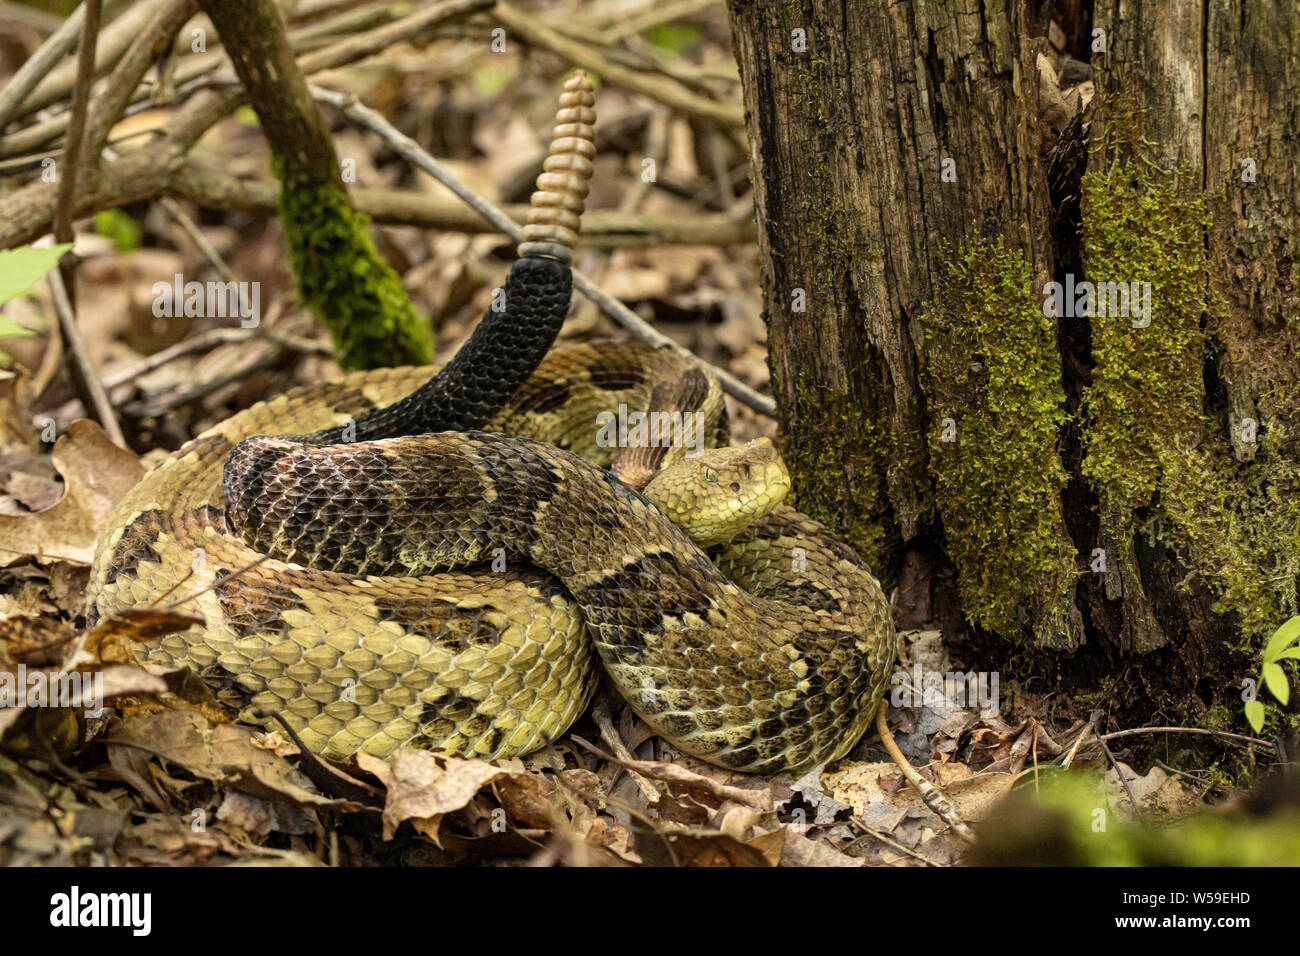 Yellow phase timber rattlesnake - Crotalus horridus Stock Photo